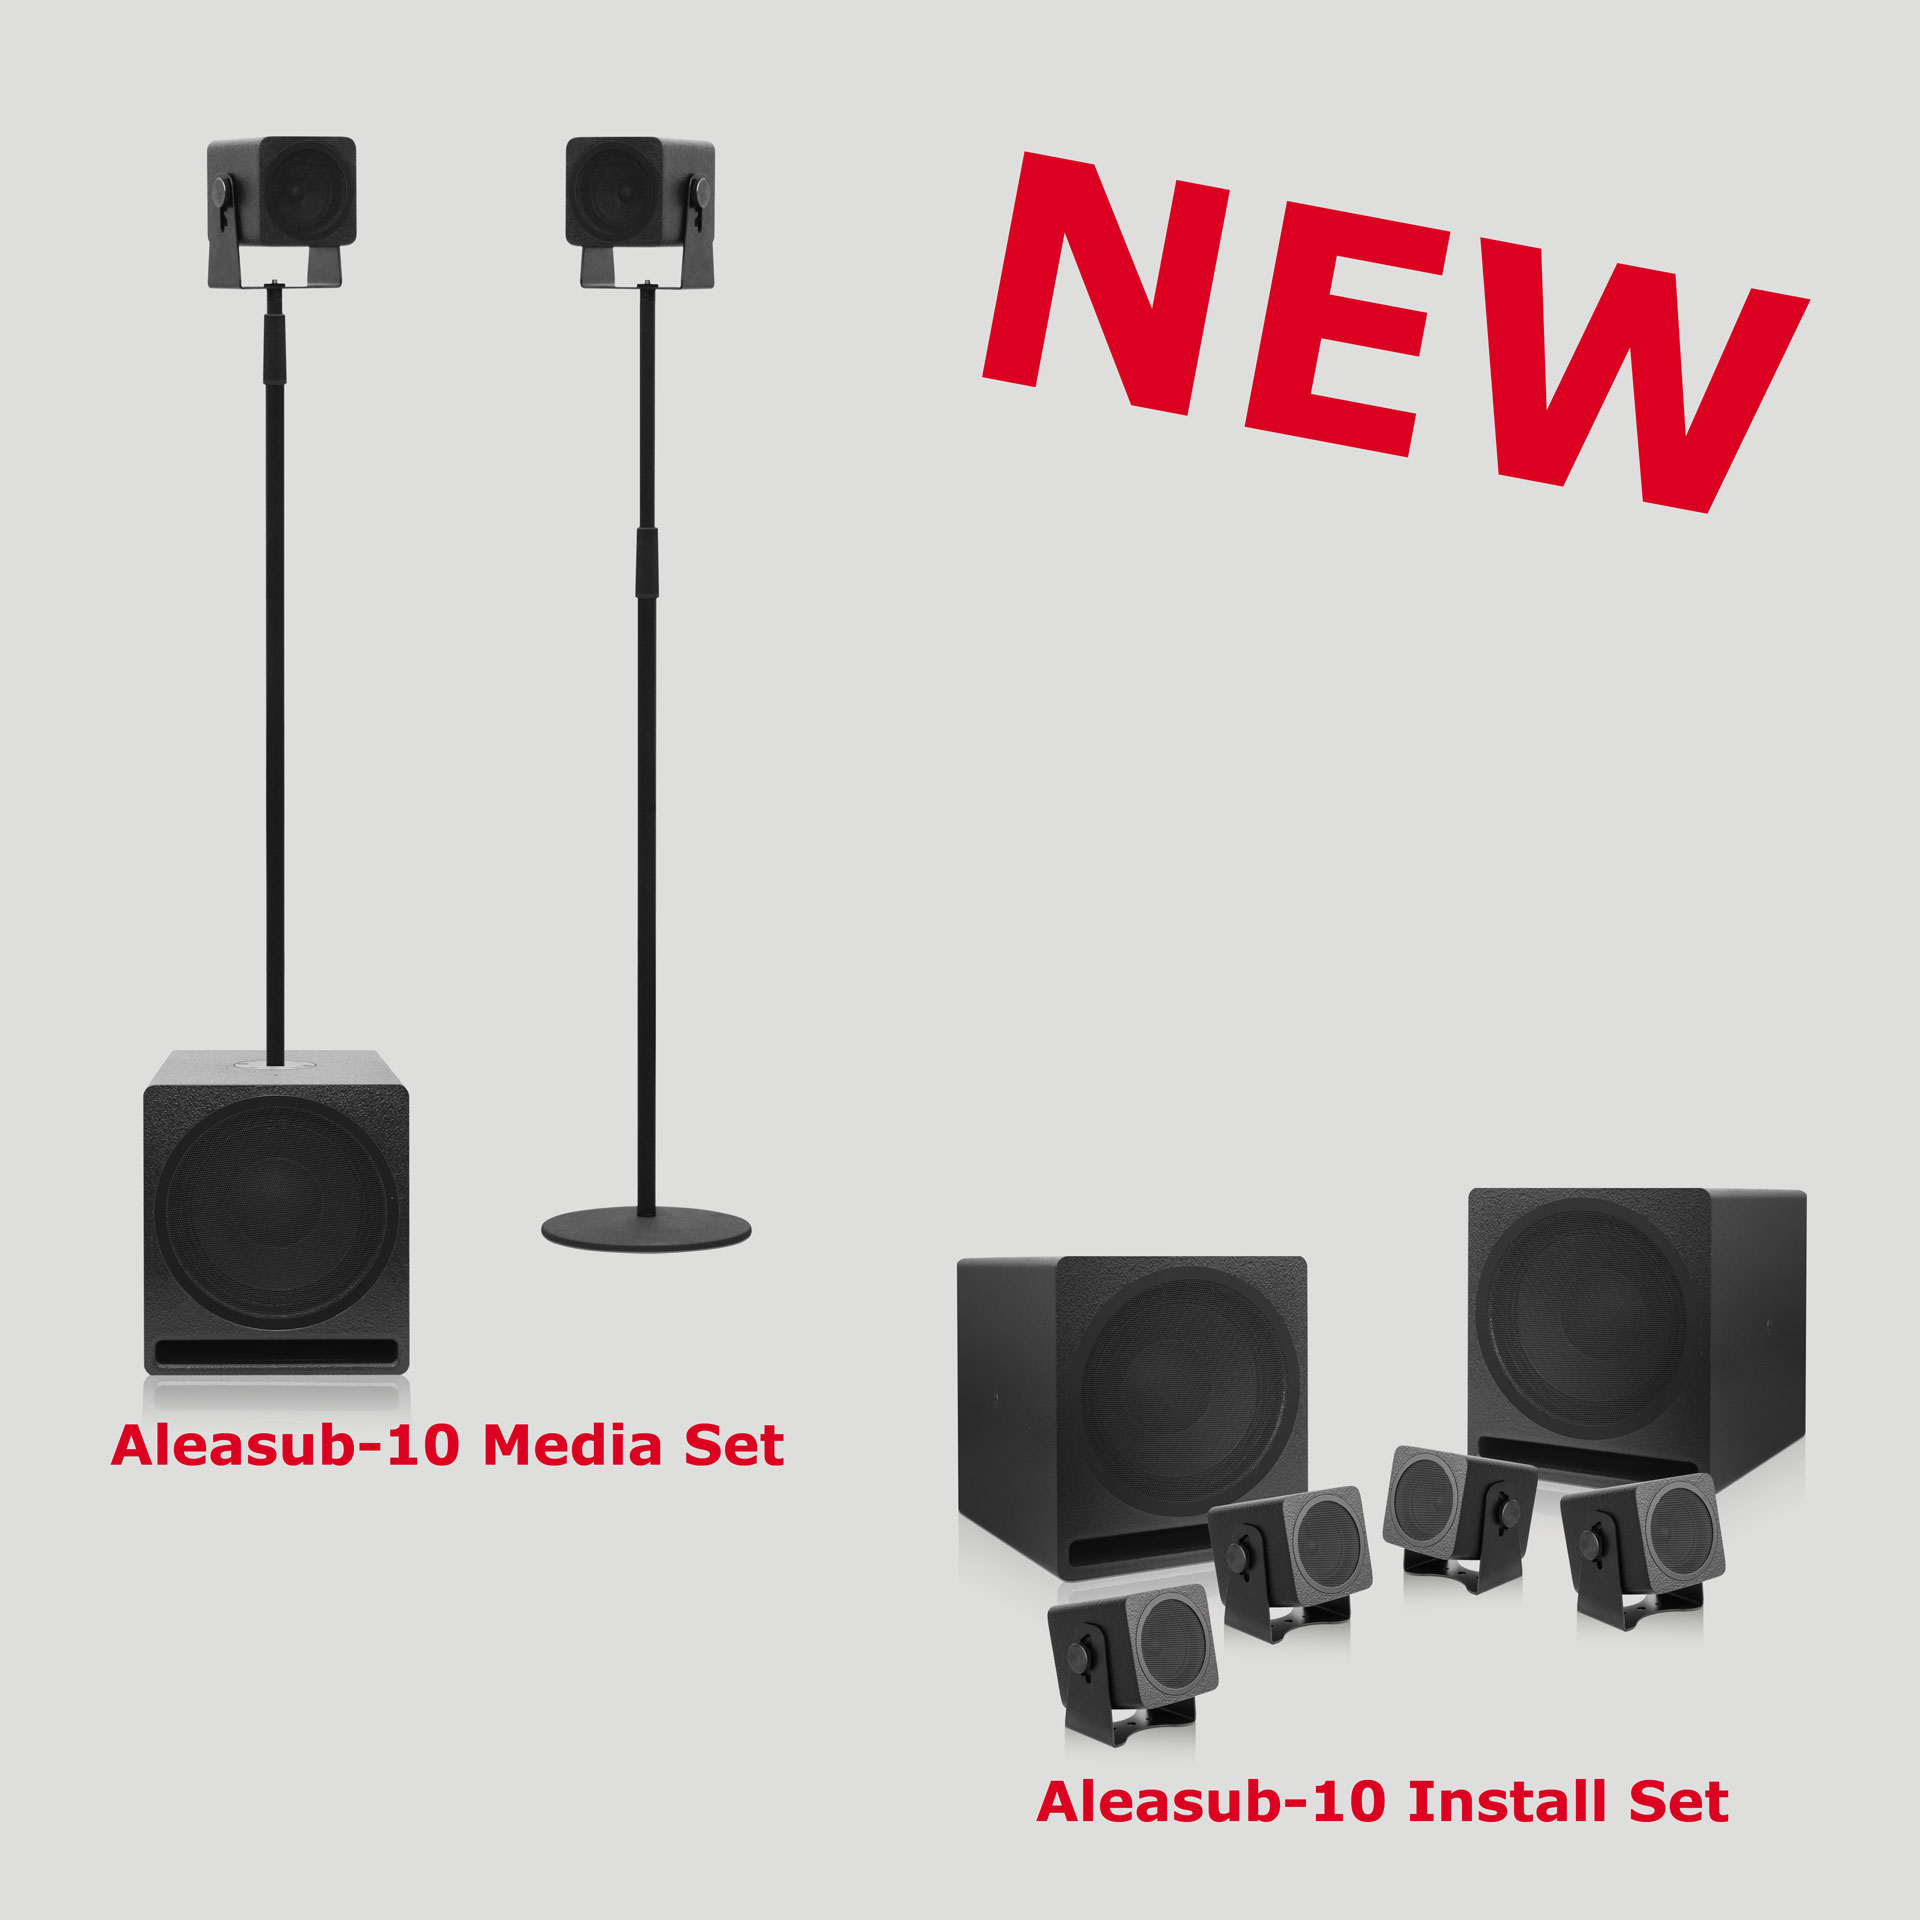 New in the program: Aleasub-10 Sets